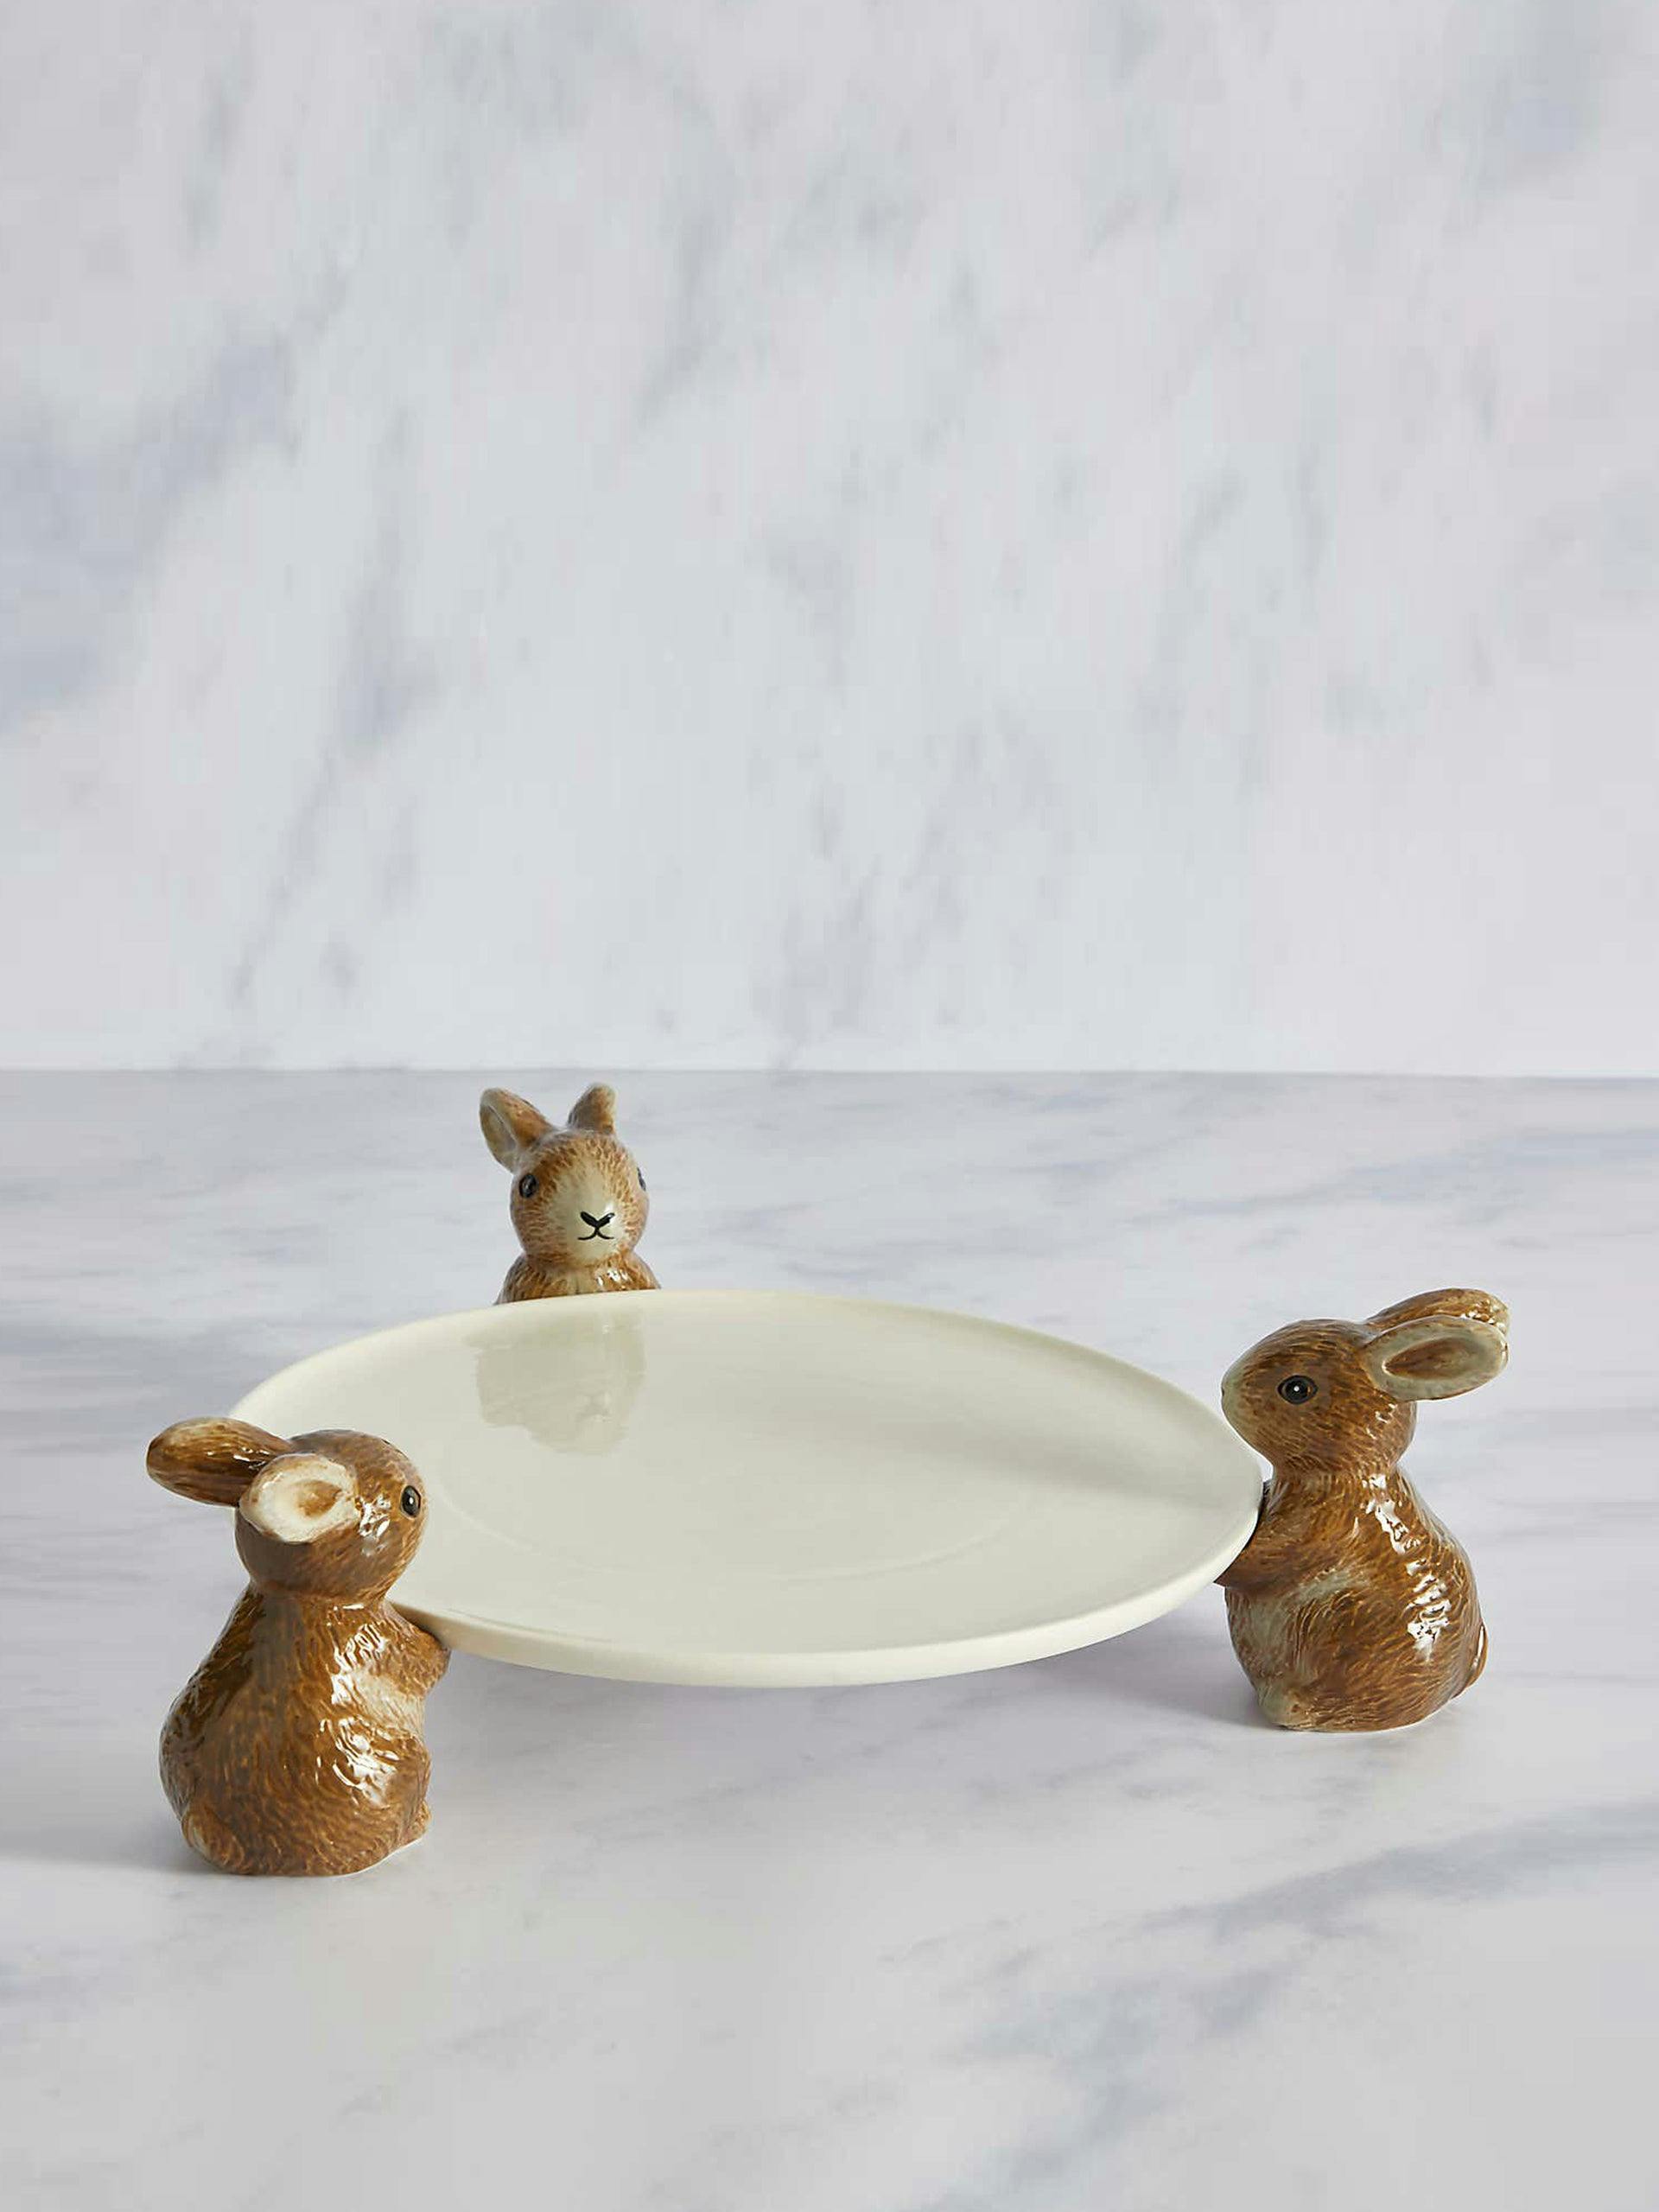 Homestead rabbit cake plate